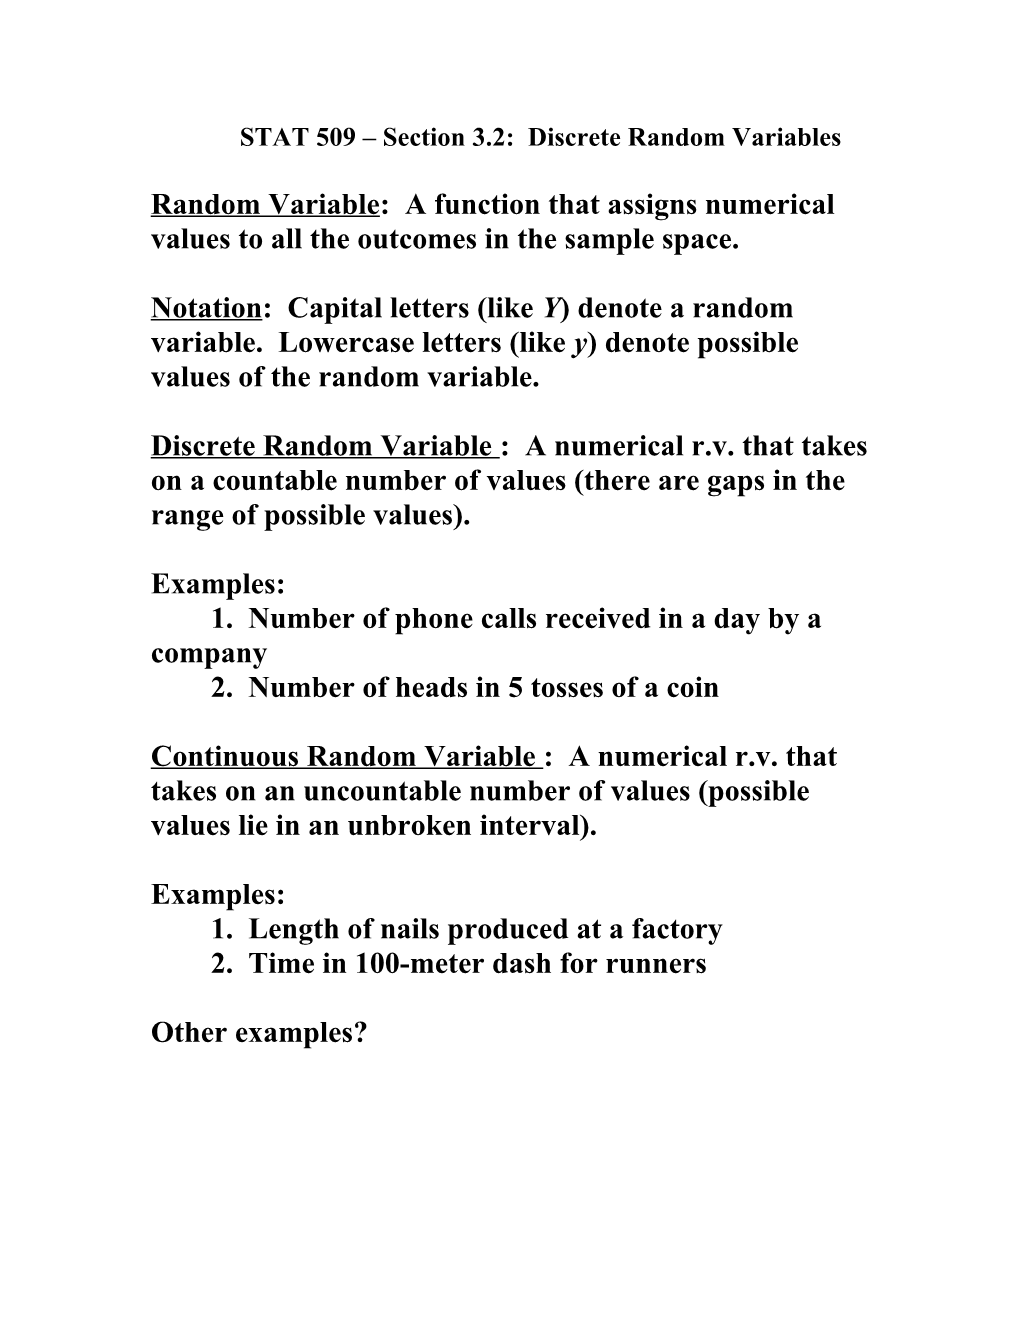 STAT 515 Chapter 4: Discrete Random Variables